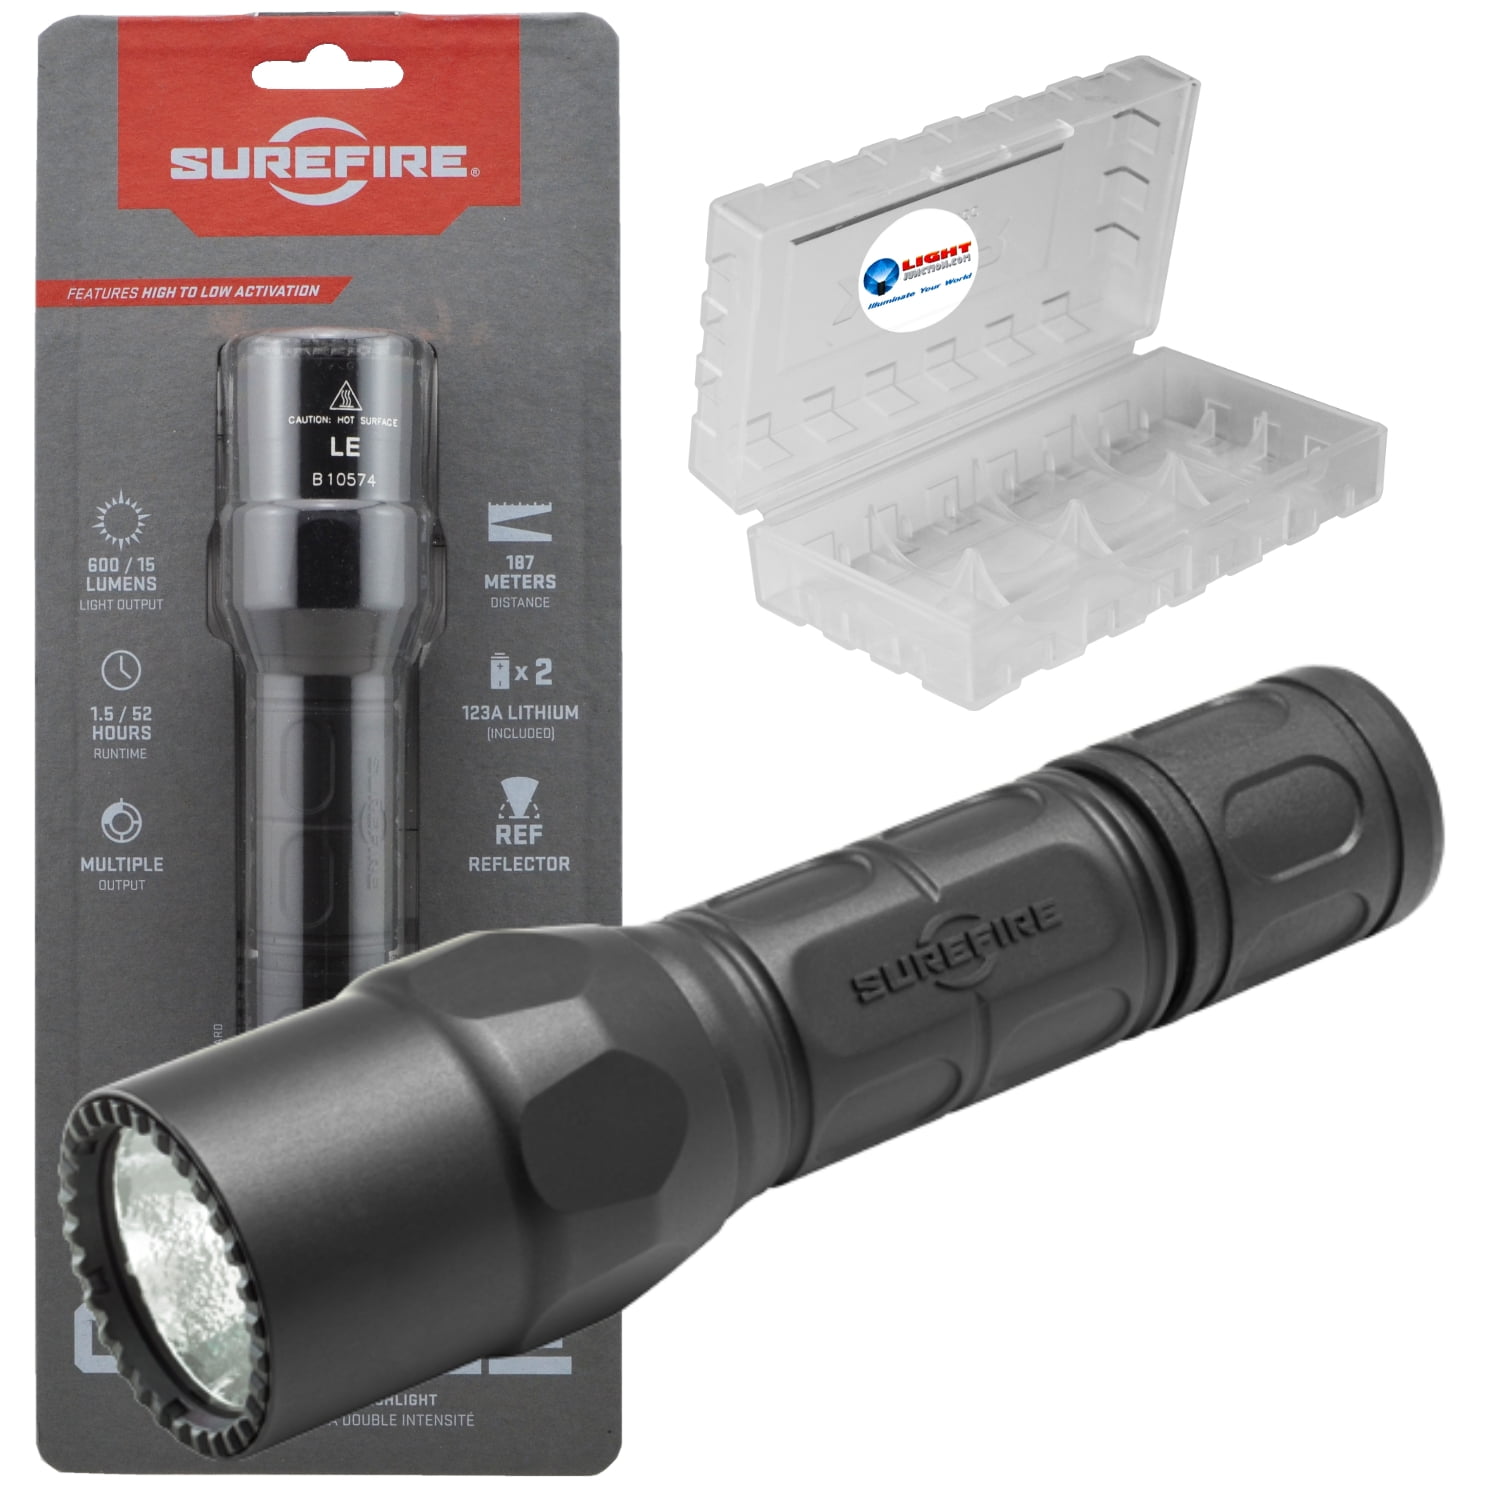 SureFire G2X LE Compact LED Flashlight 600 Lumen Tactical Light, Black  Bundle with a Lightjunction Battery Box